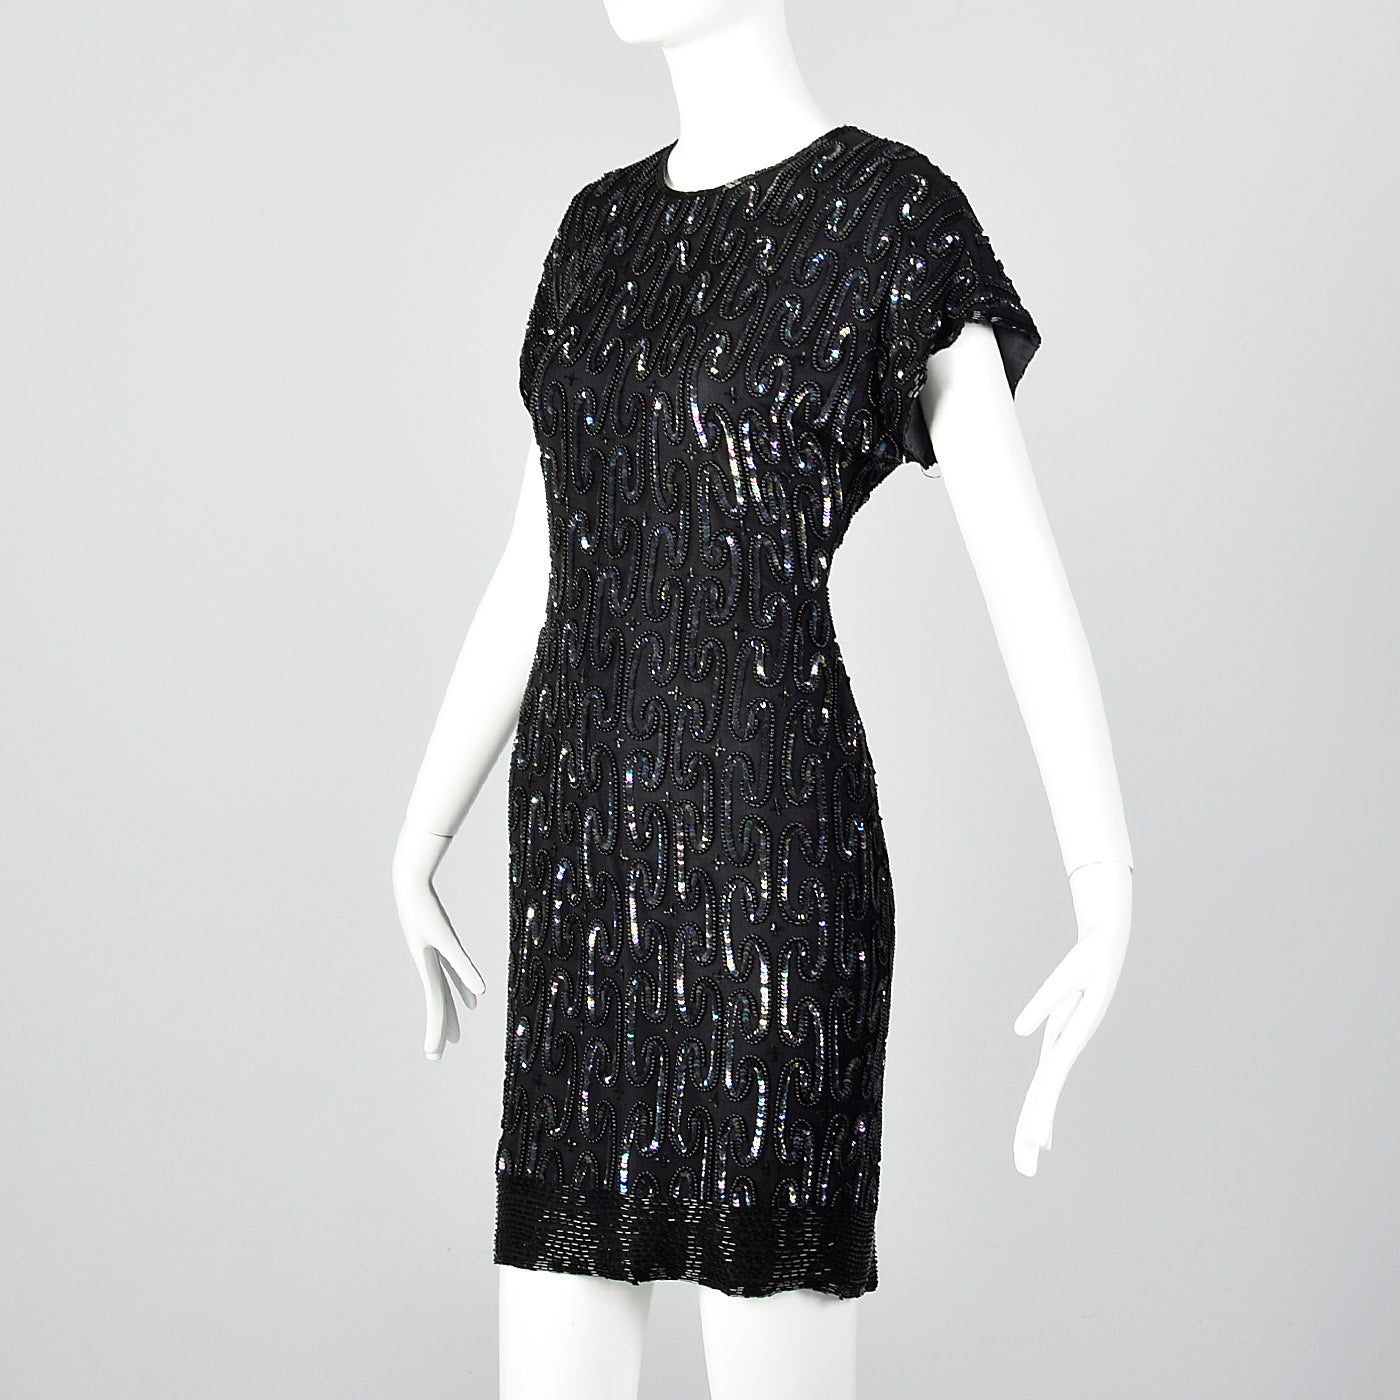 1990s Black Beaded Cocktail Dress